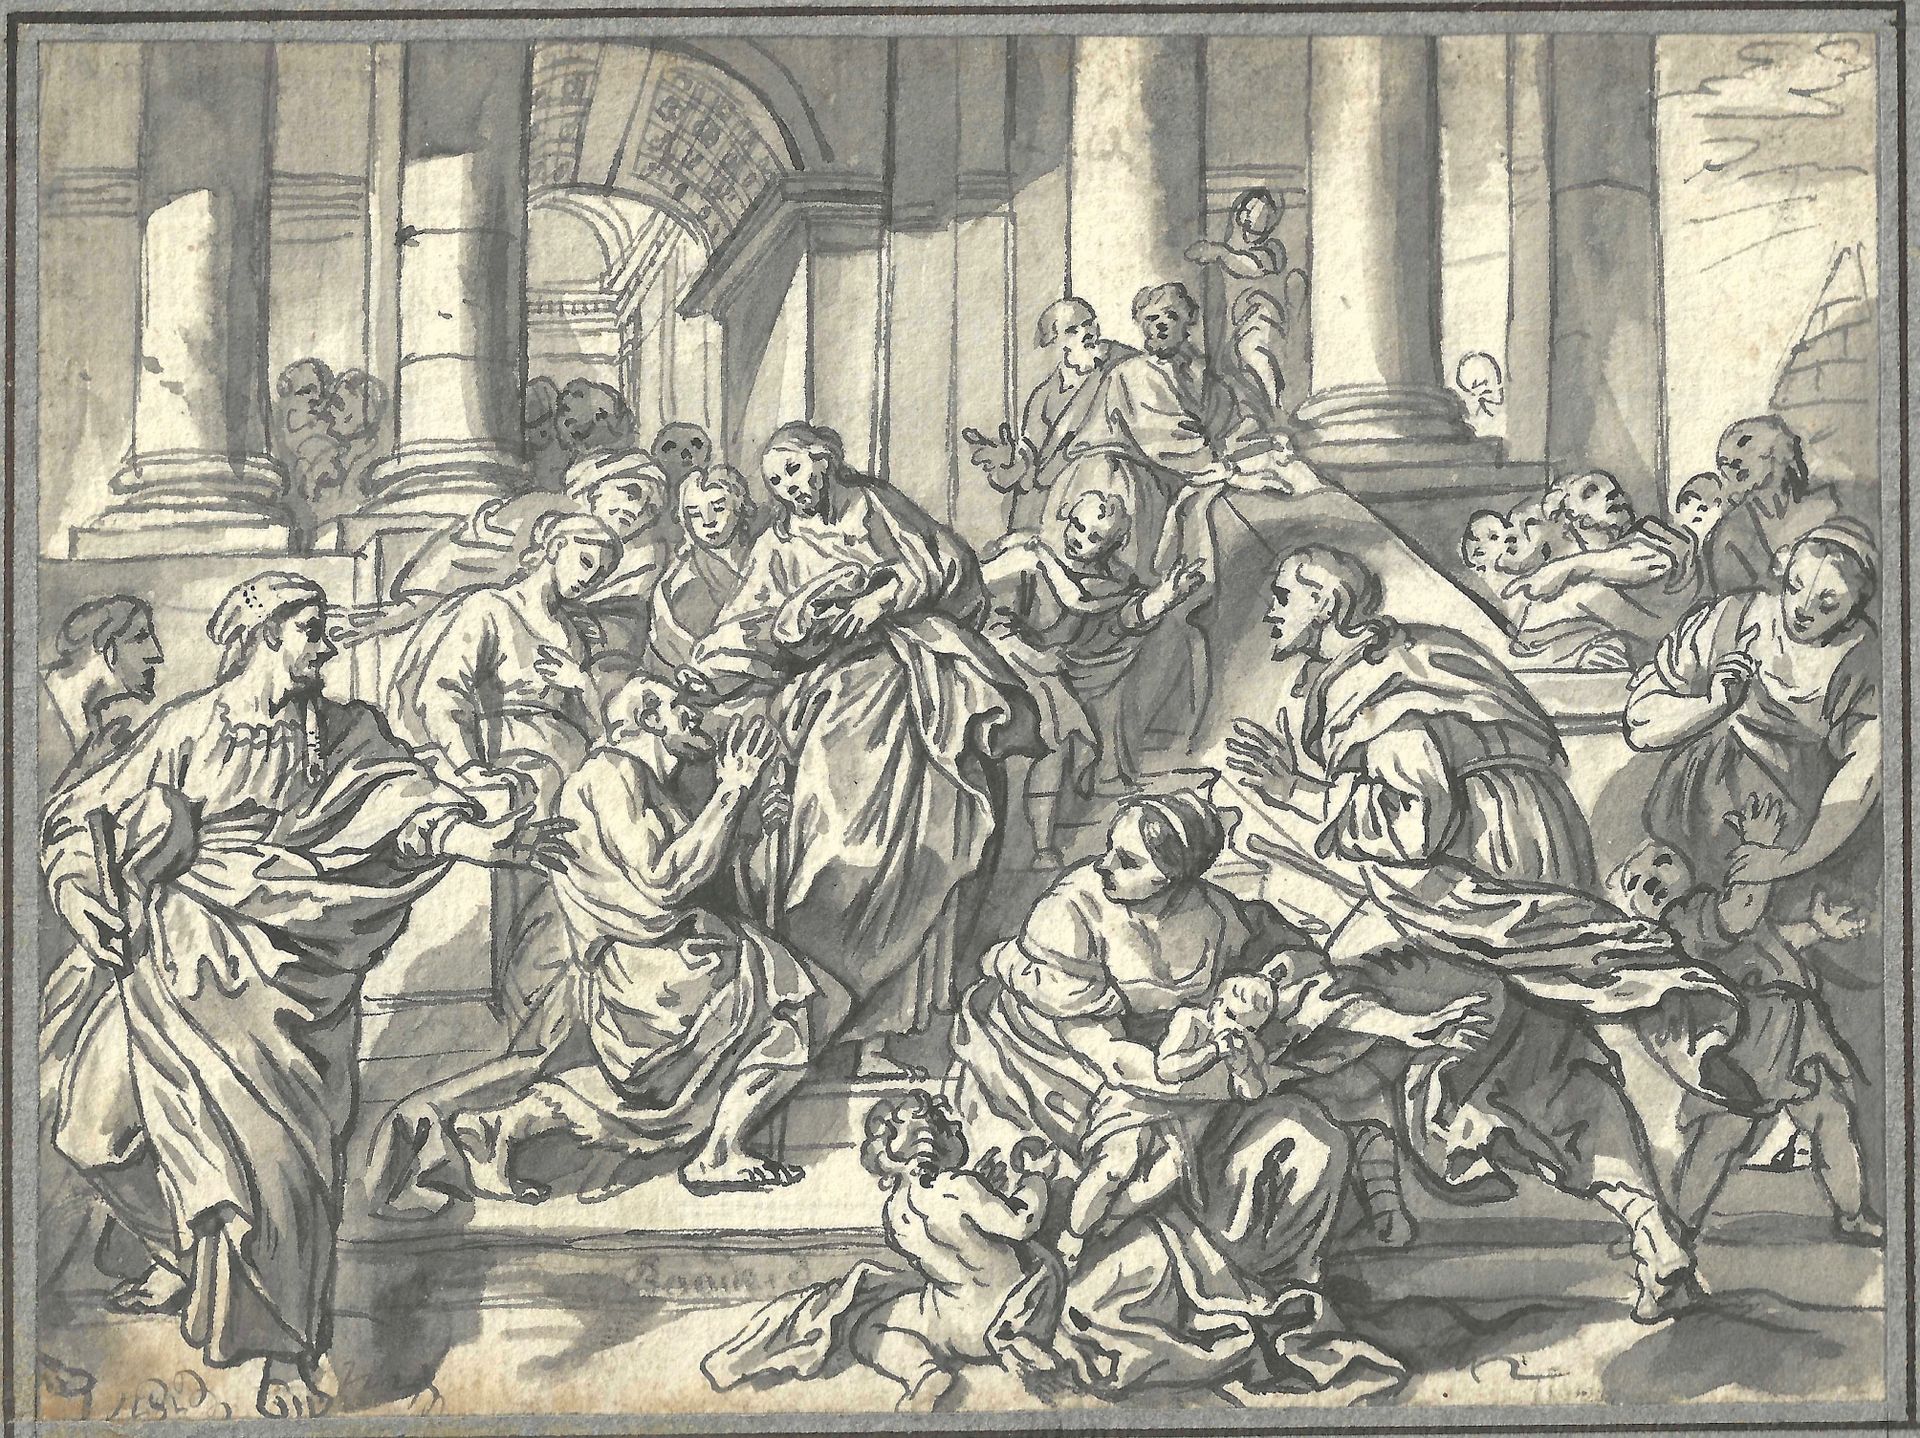 Null 意大利学校约1700年

基督与瘫痪者

钢笔和灰色墨水，灰色水洗

12 x 16.5 cm

左下角有模糊的注释